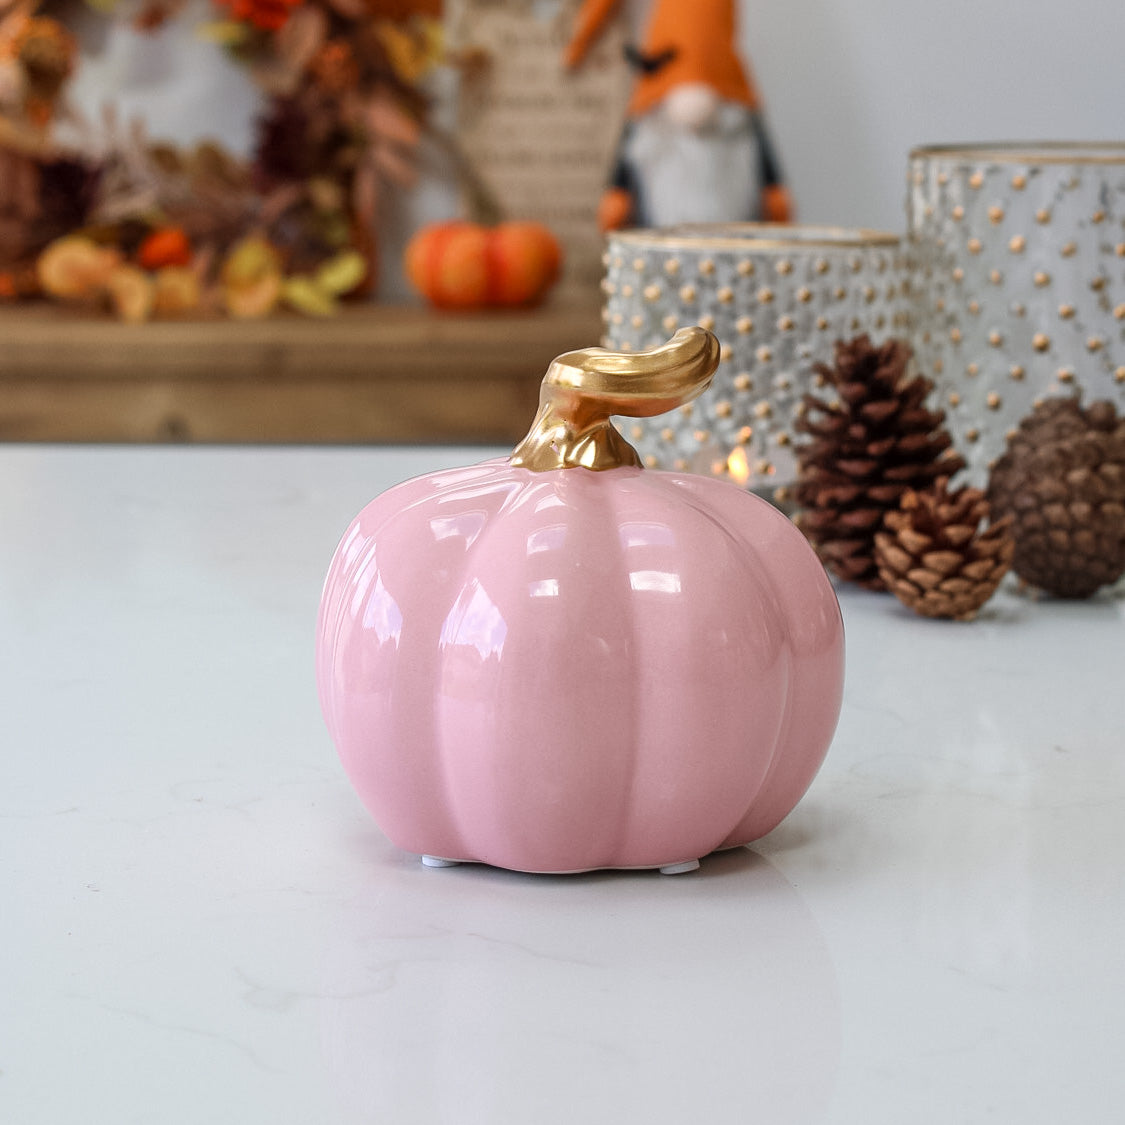 Pink Ceramic Pumpkins